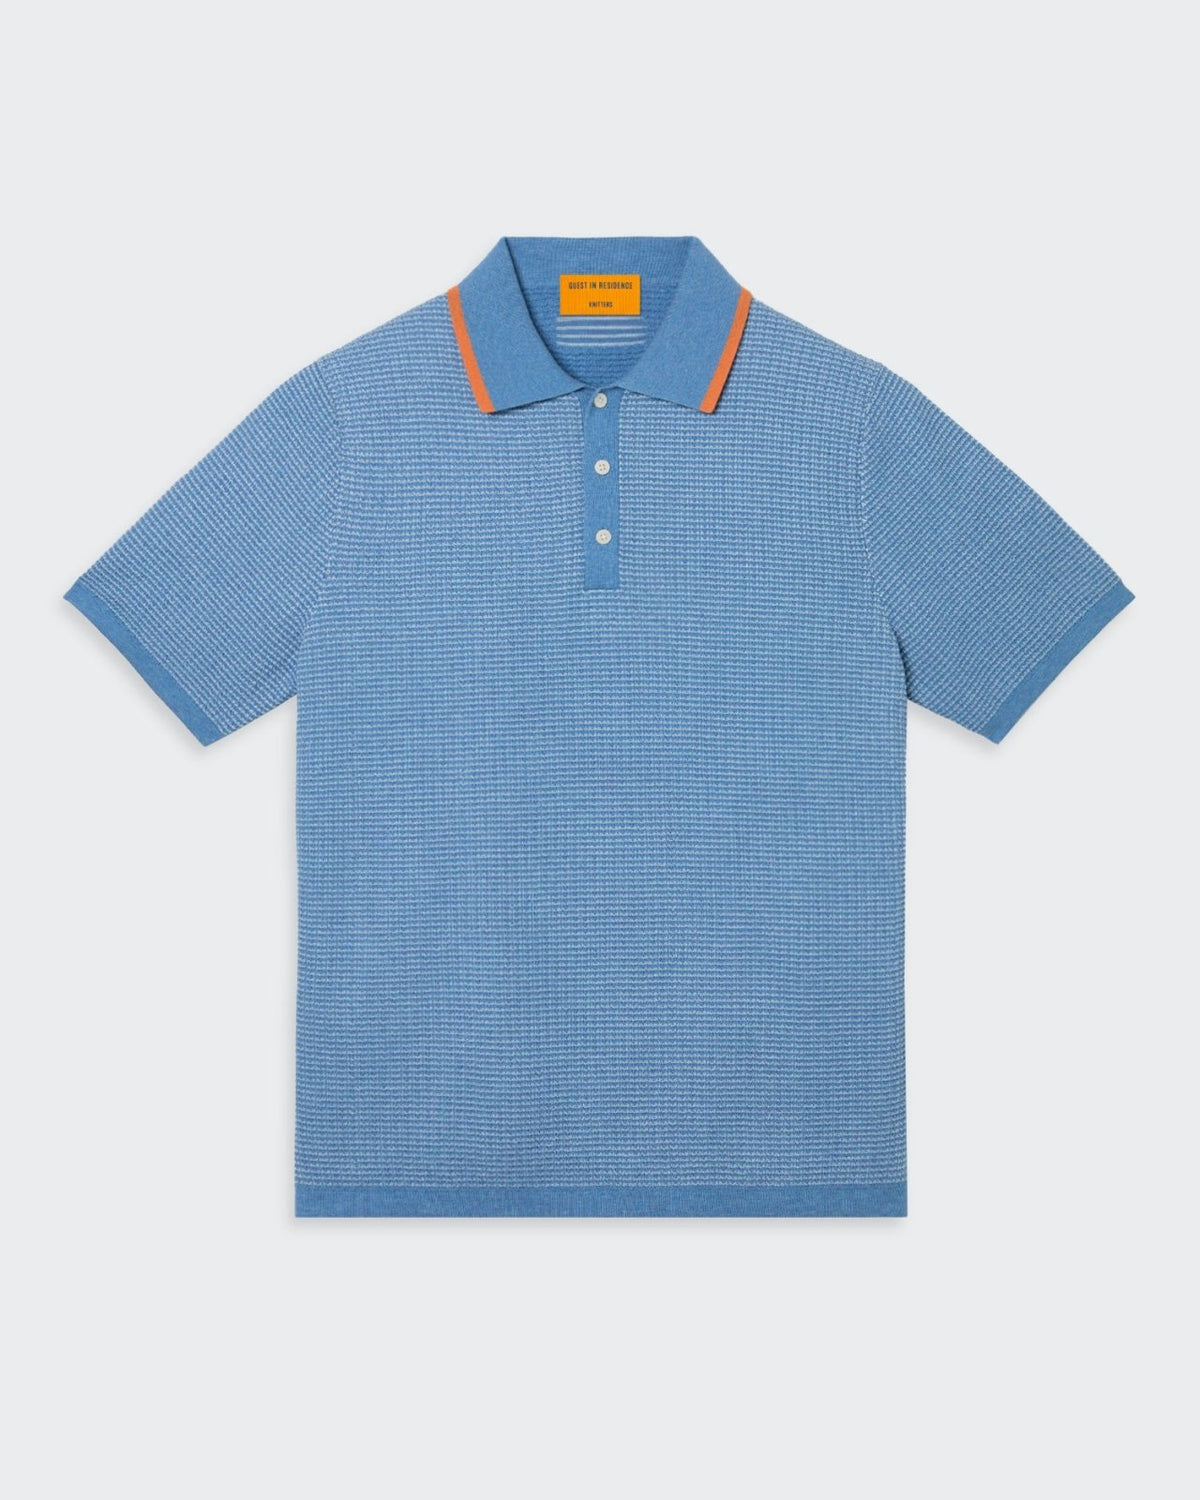 Ss Textured Polo - Denim Blue/Cream/Orange